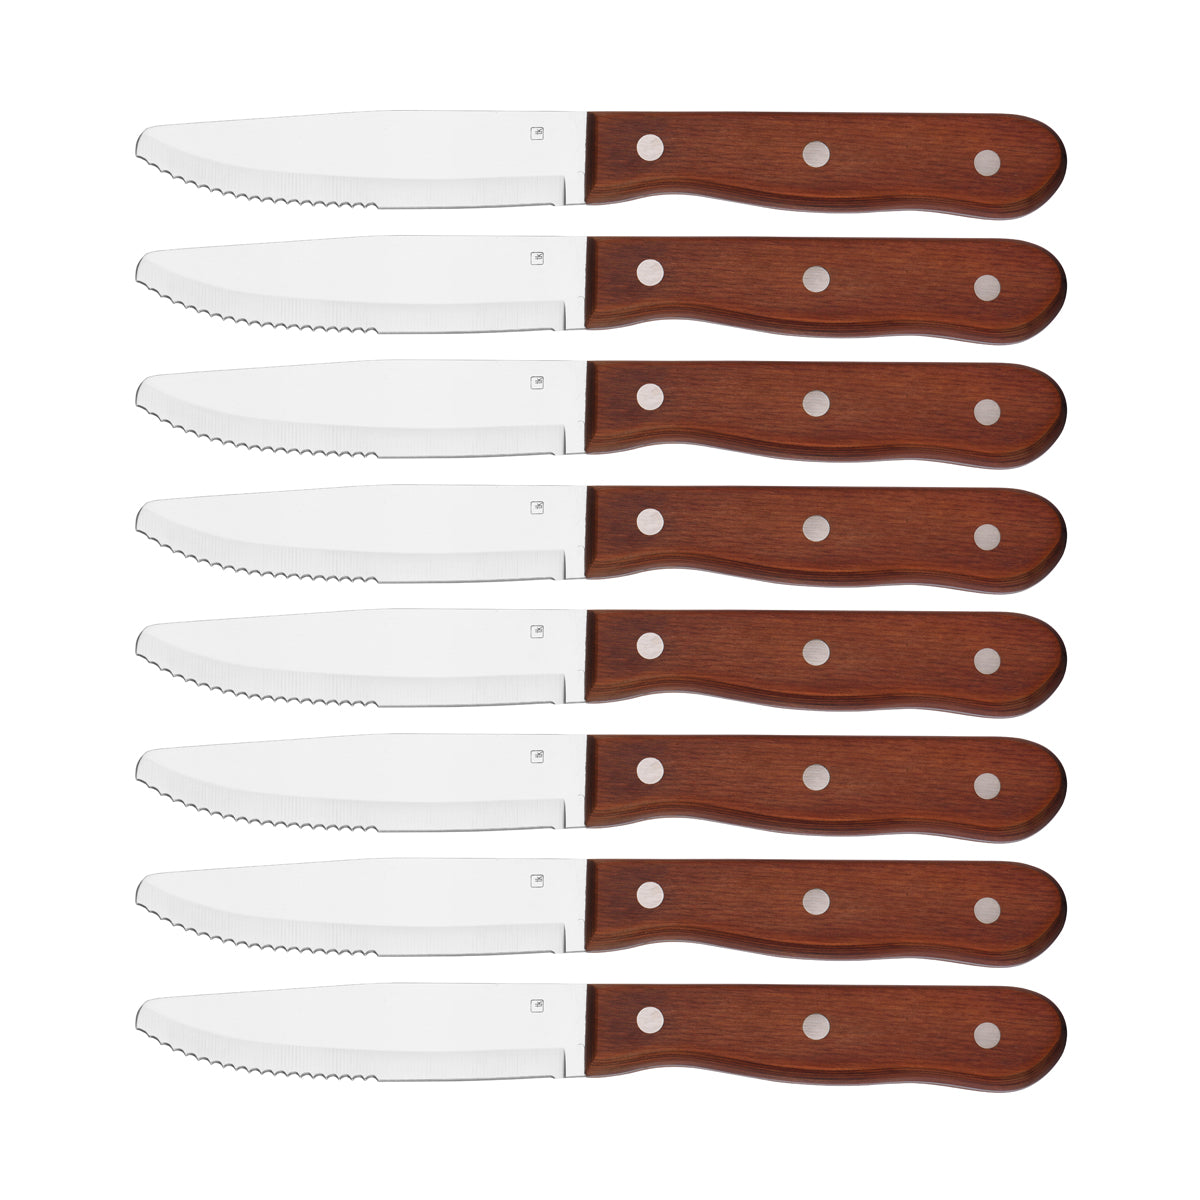 20675-8 Tablekraft Steak Knive Jumbo Round Tip Pakkawood Set 8pc Tomkin Australia Hospitality Supplies